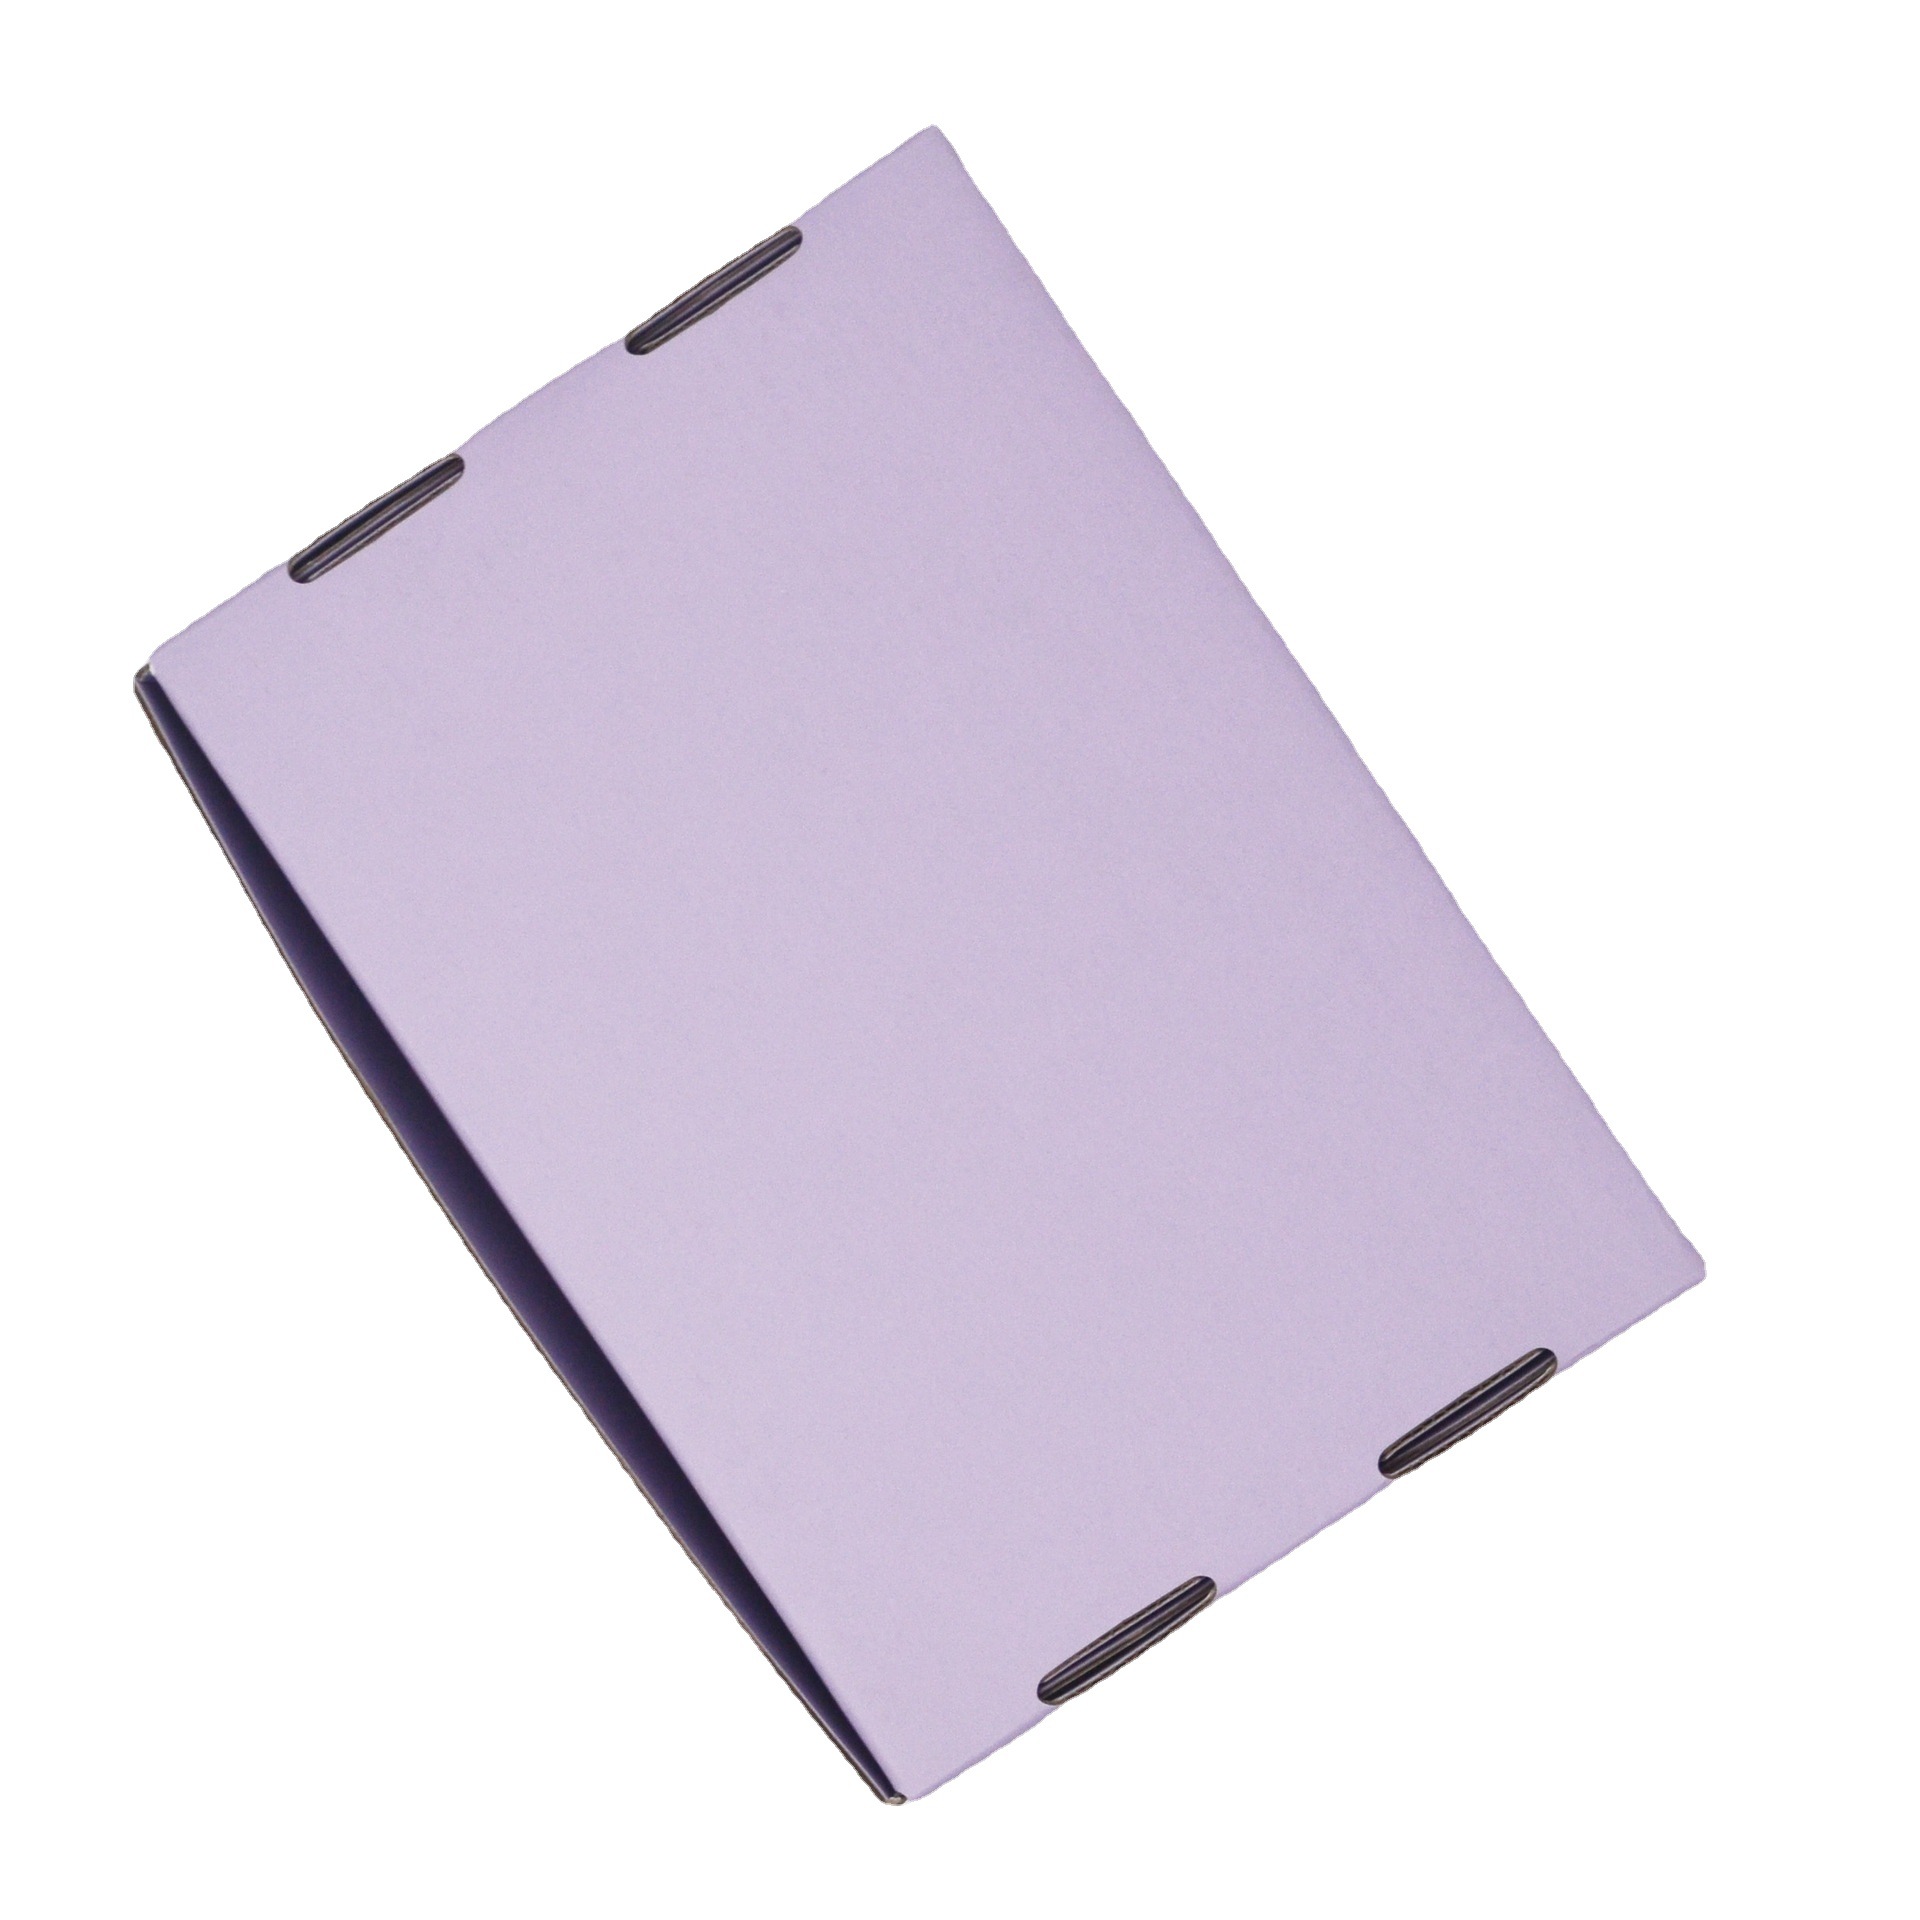 Purple Color Corrugated Cardboard Paper Carton Box,China Wholesale Recyclable Mailer Box